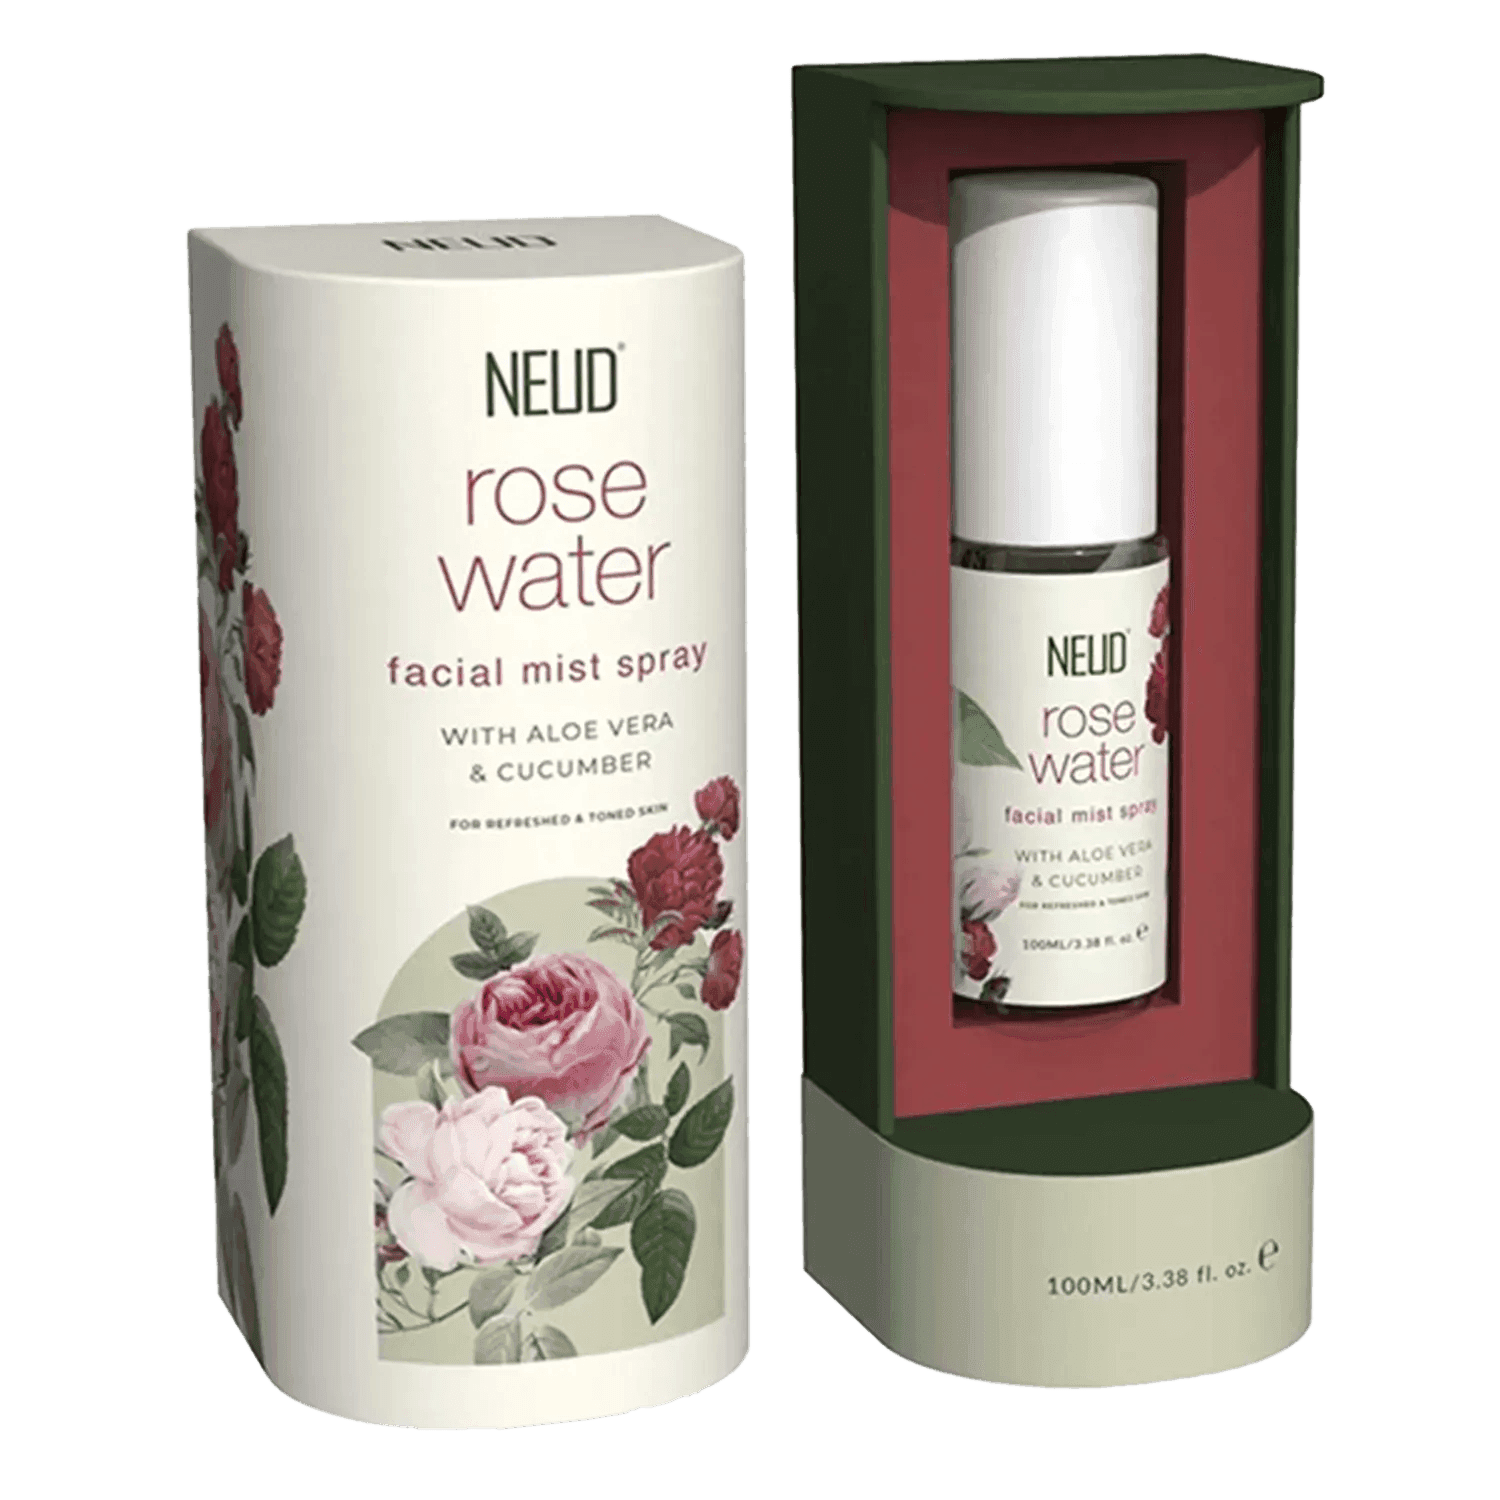 neud rose water facial mist spray 2 packs (100ml)